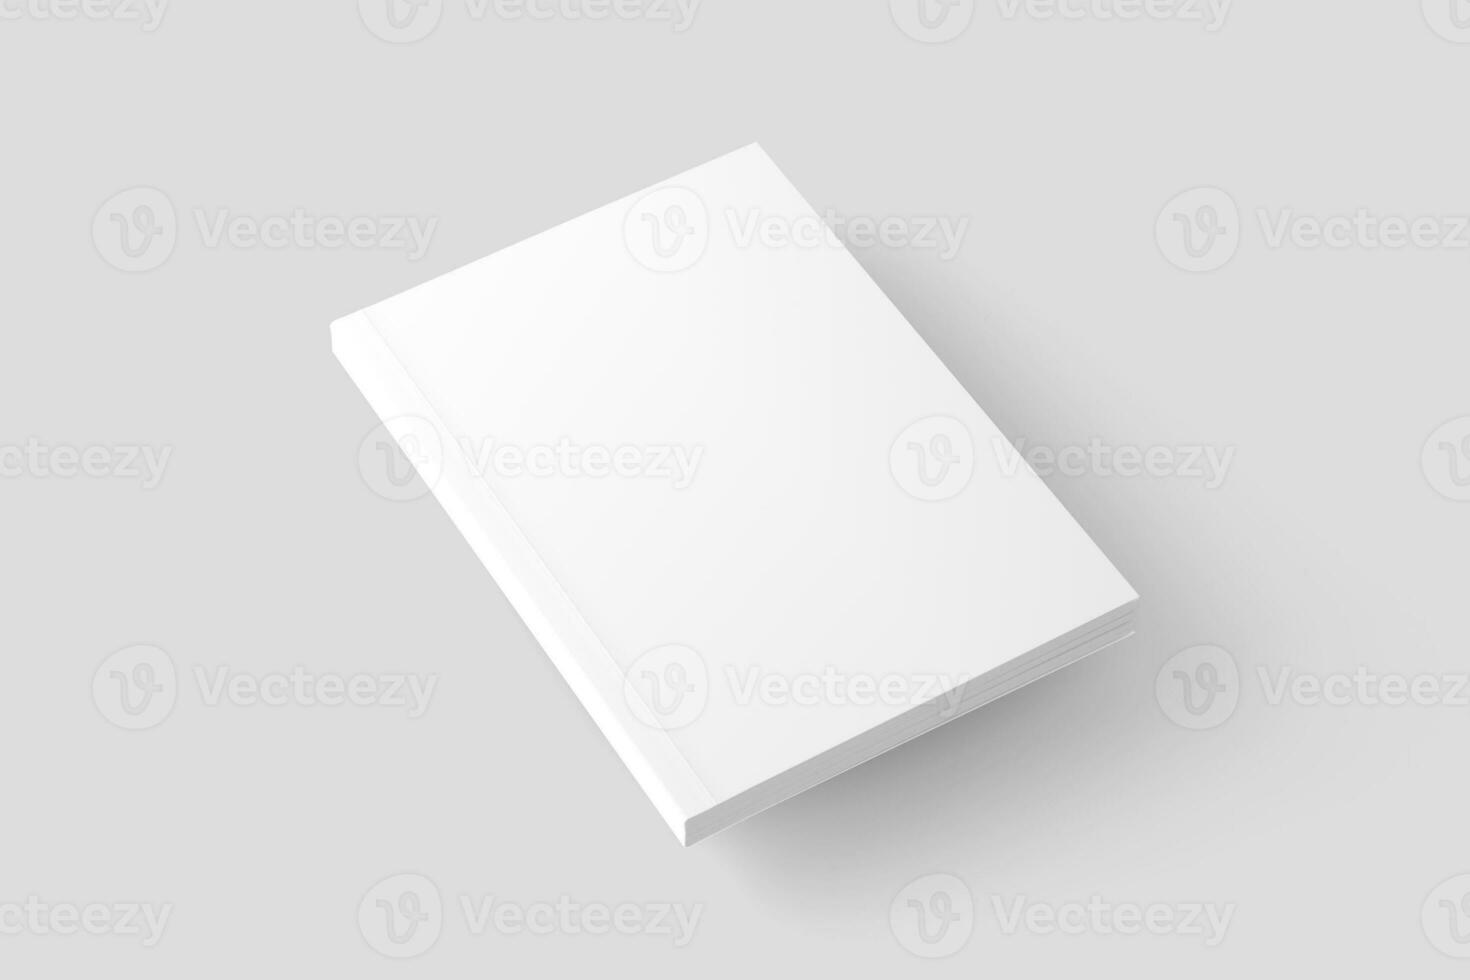 zachte kaft boek Hoes wit blanco 3d renderen mockup foto